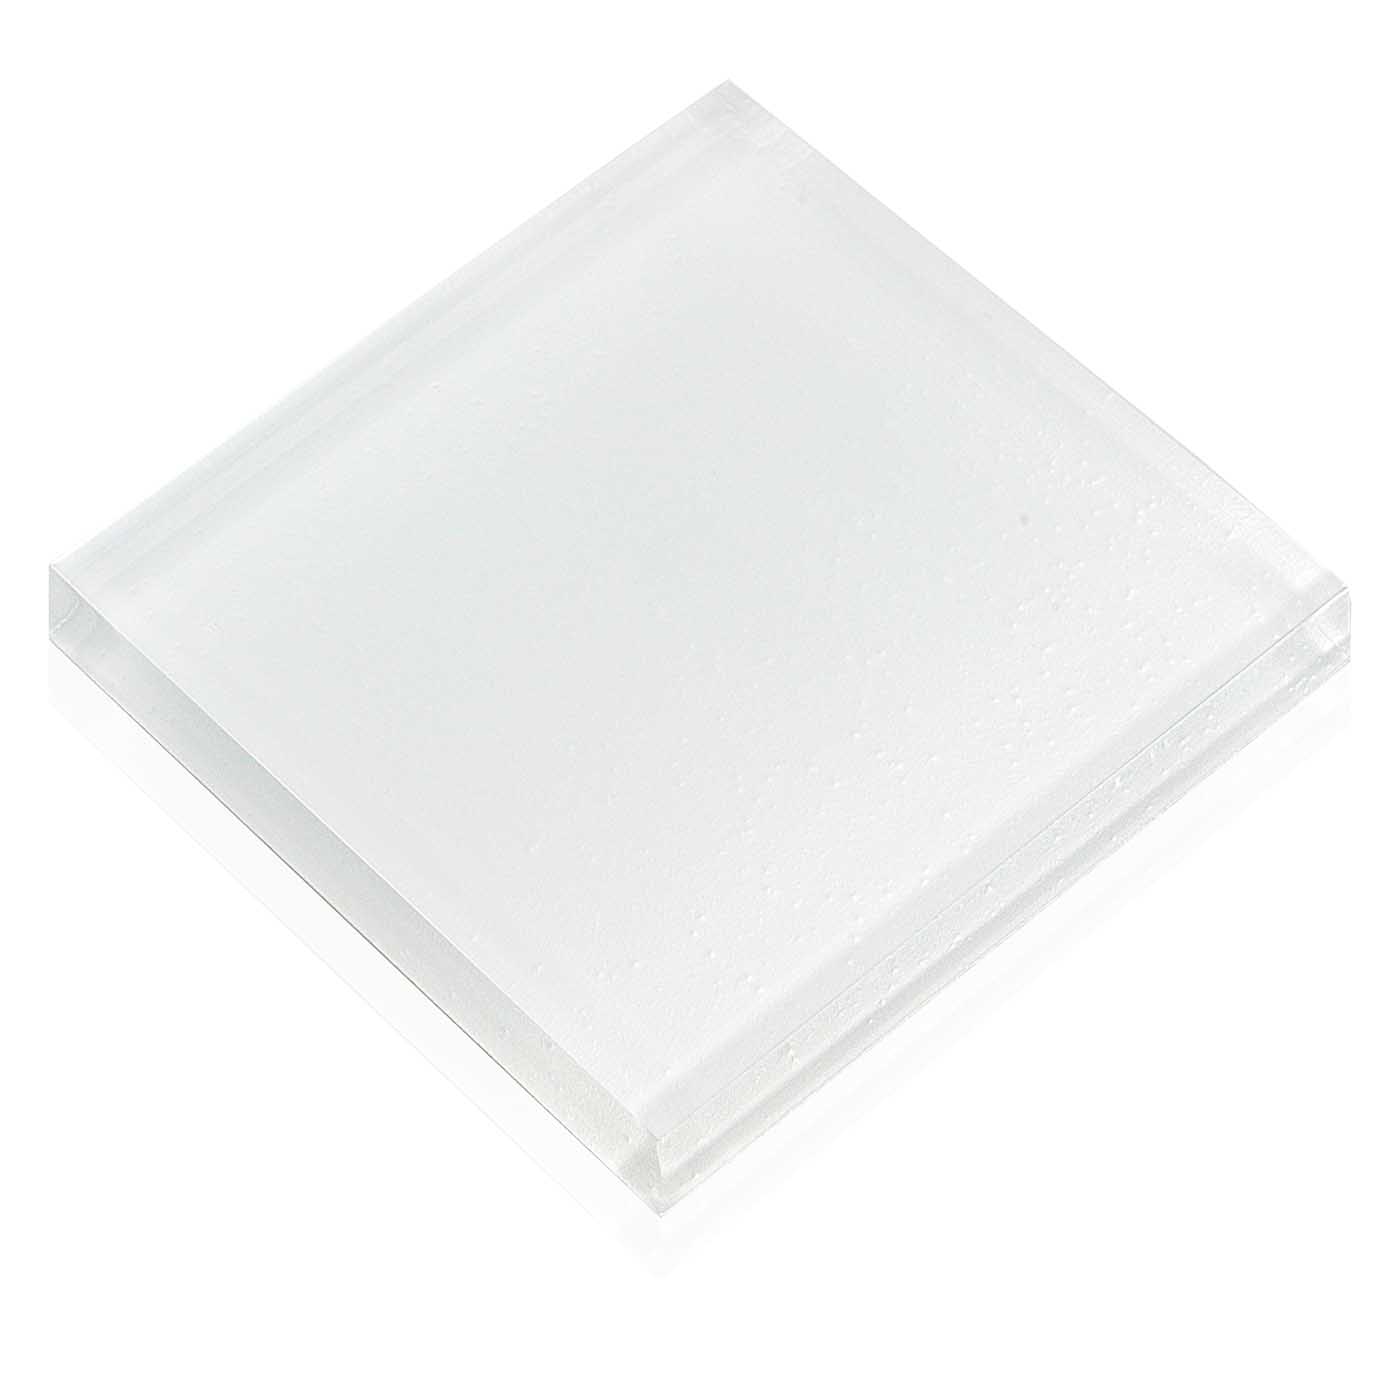 Item 2 - unicolor-glossy-0001-bright-white